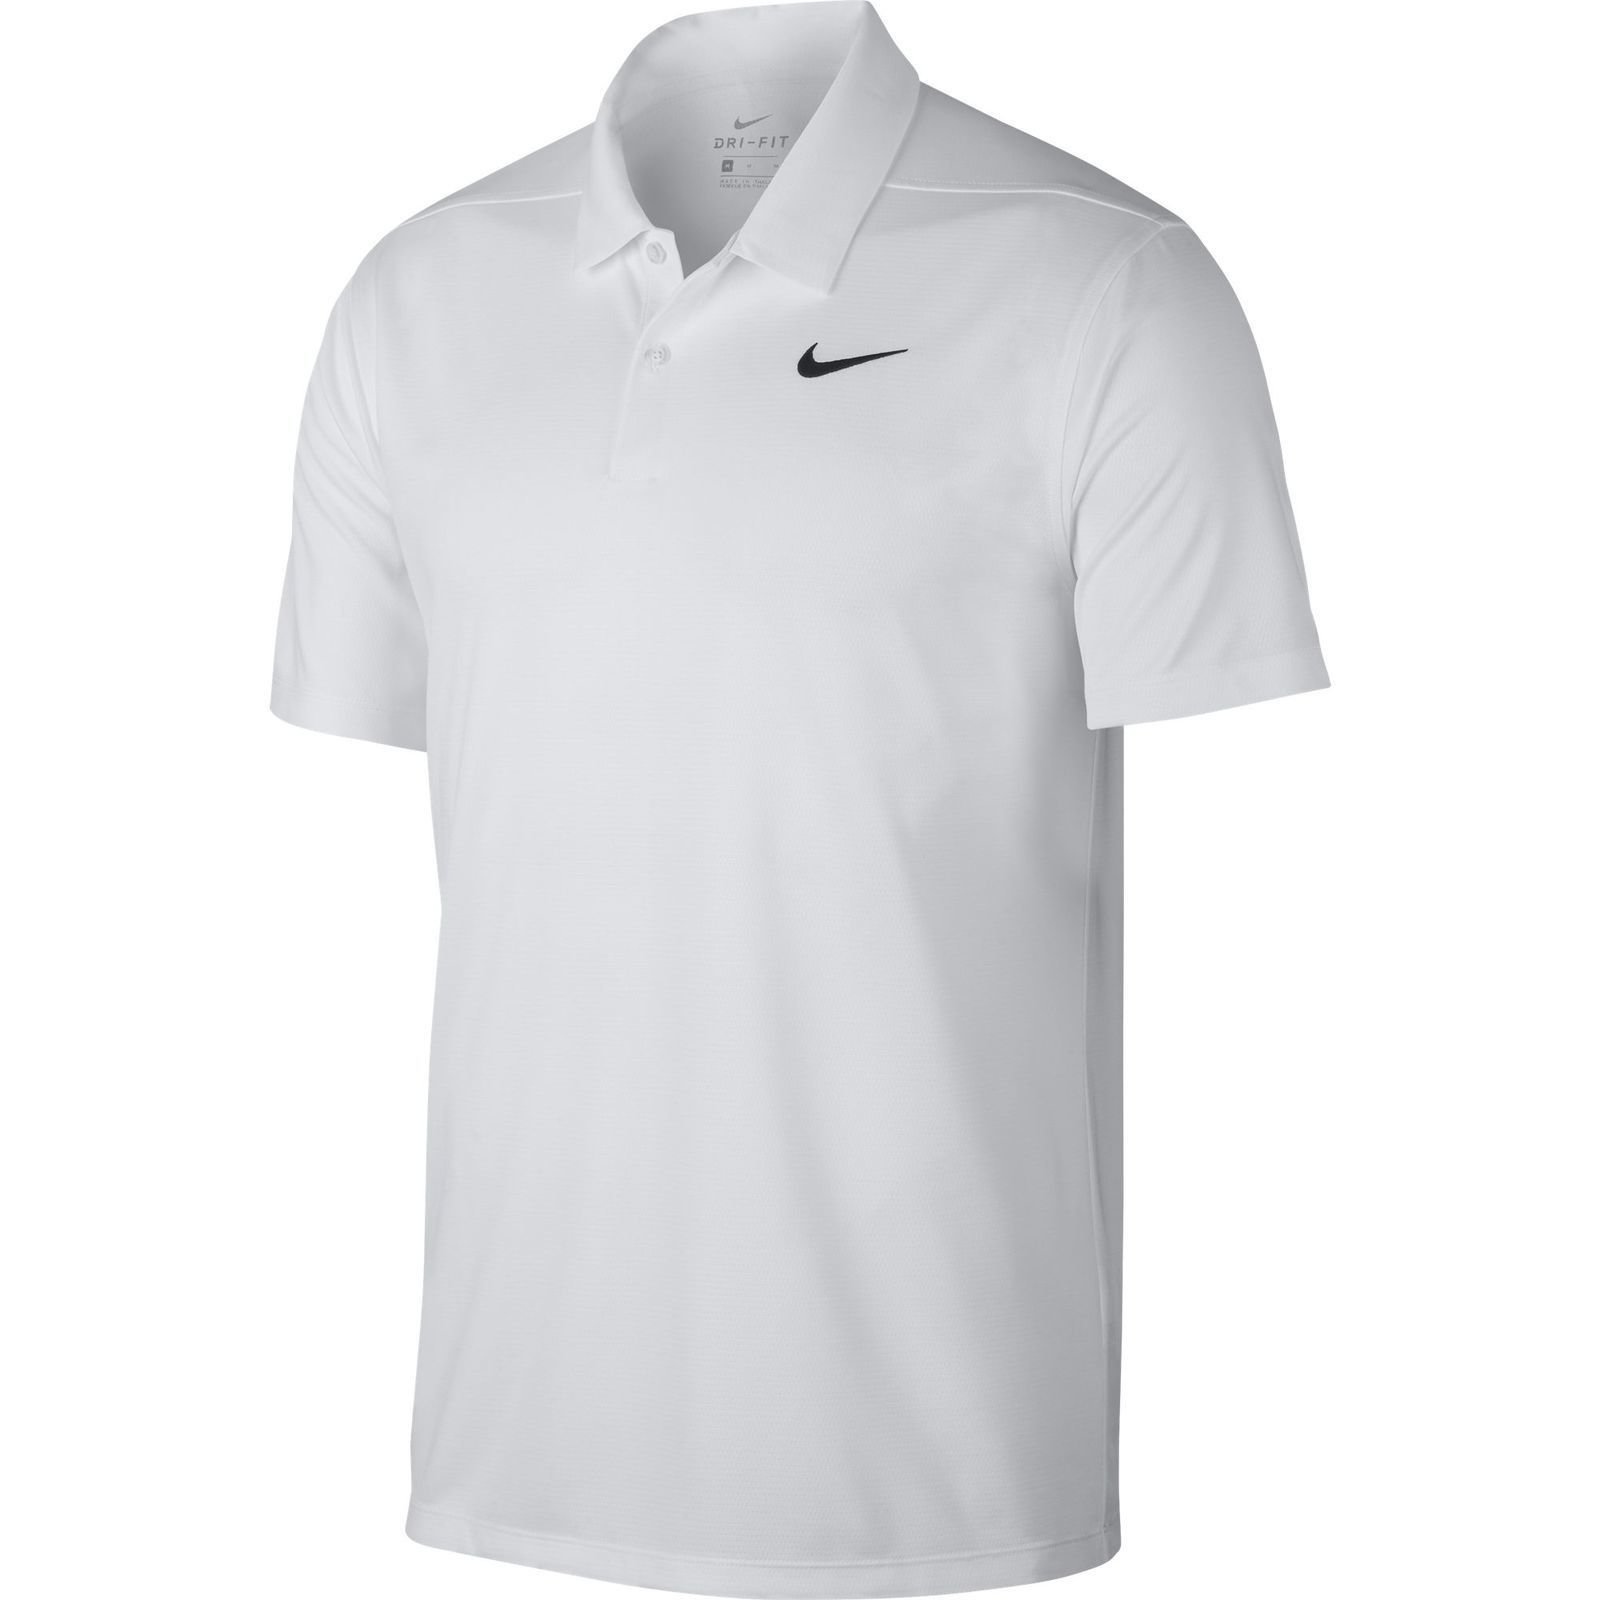 Polo trøje Nike Dry Essential Solid hvid-Sort XL